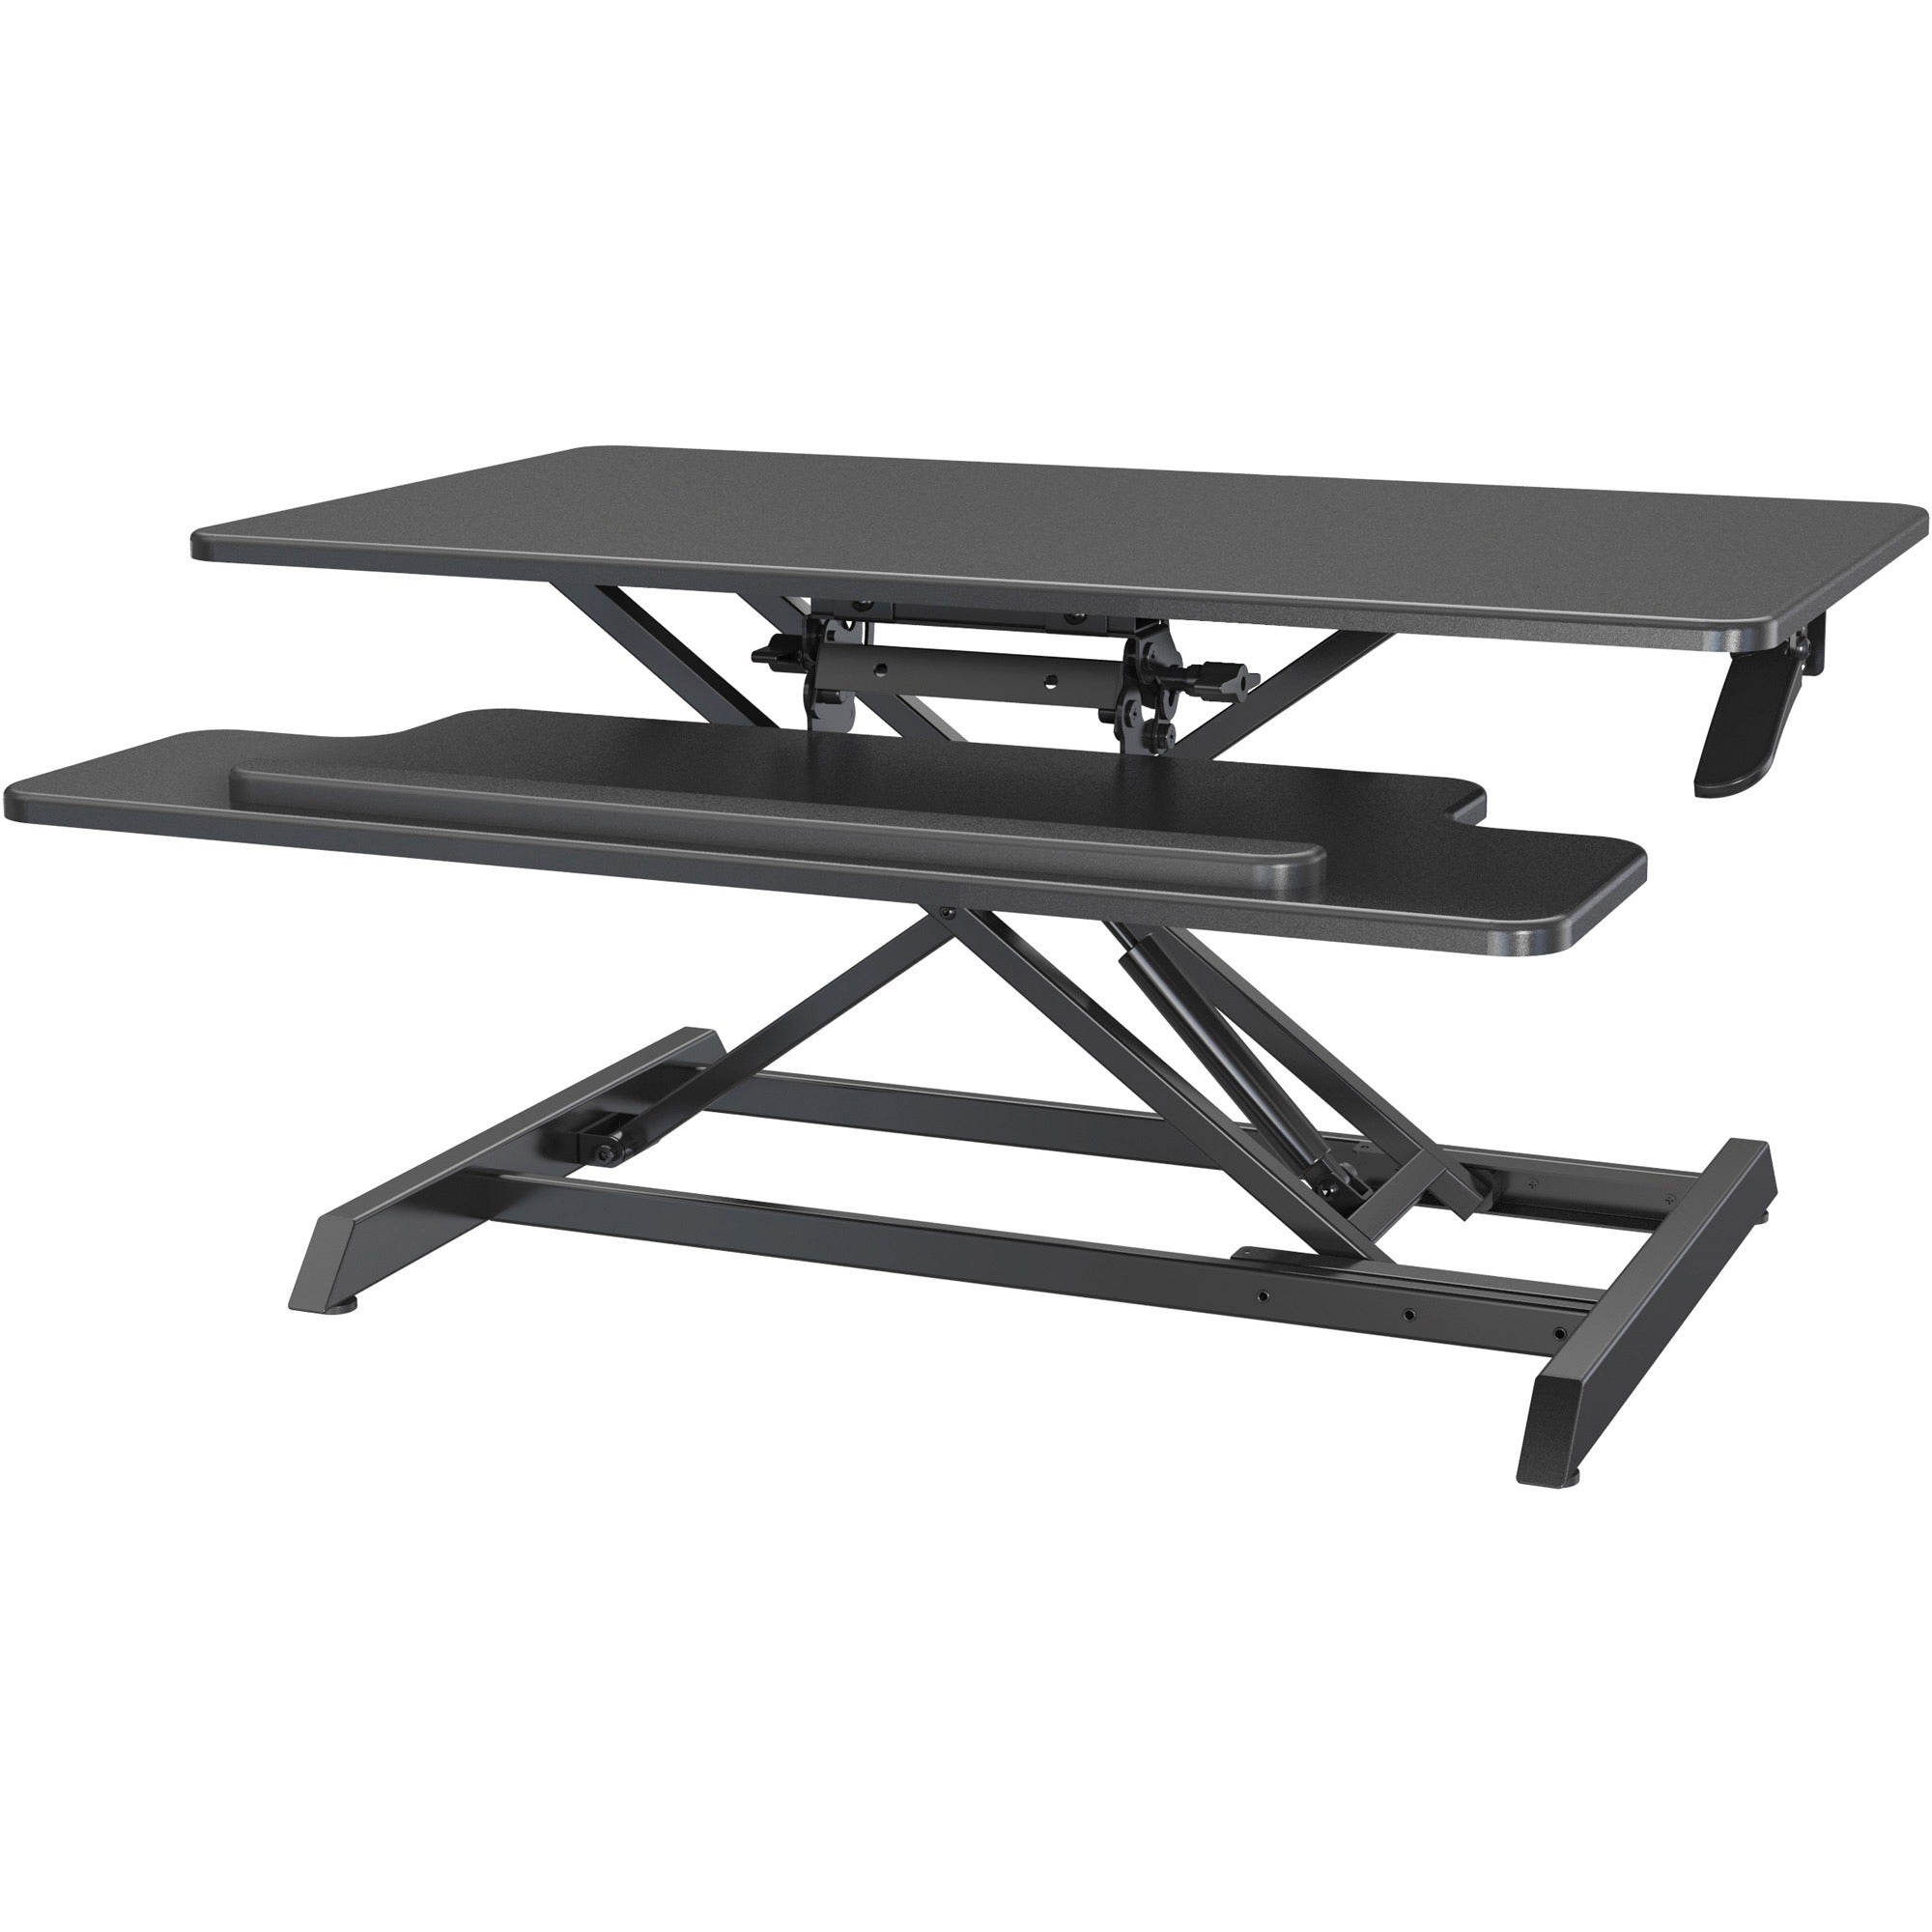 lorell-large-monitor-desk-riser-3740-lb-load-capacity-196-height-x-354-width-x-193-depth-desk-polyvinyl-chloride-pvc-medium-density-fiberboard-mdf-black_llr99555 - 5